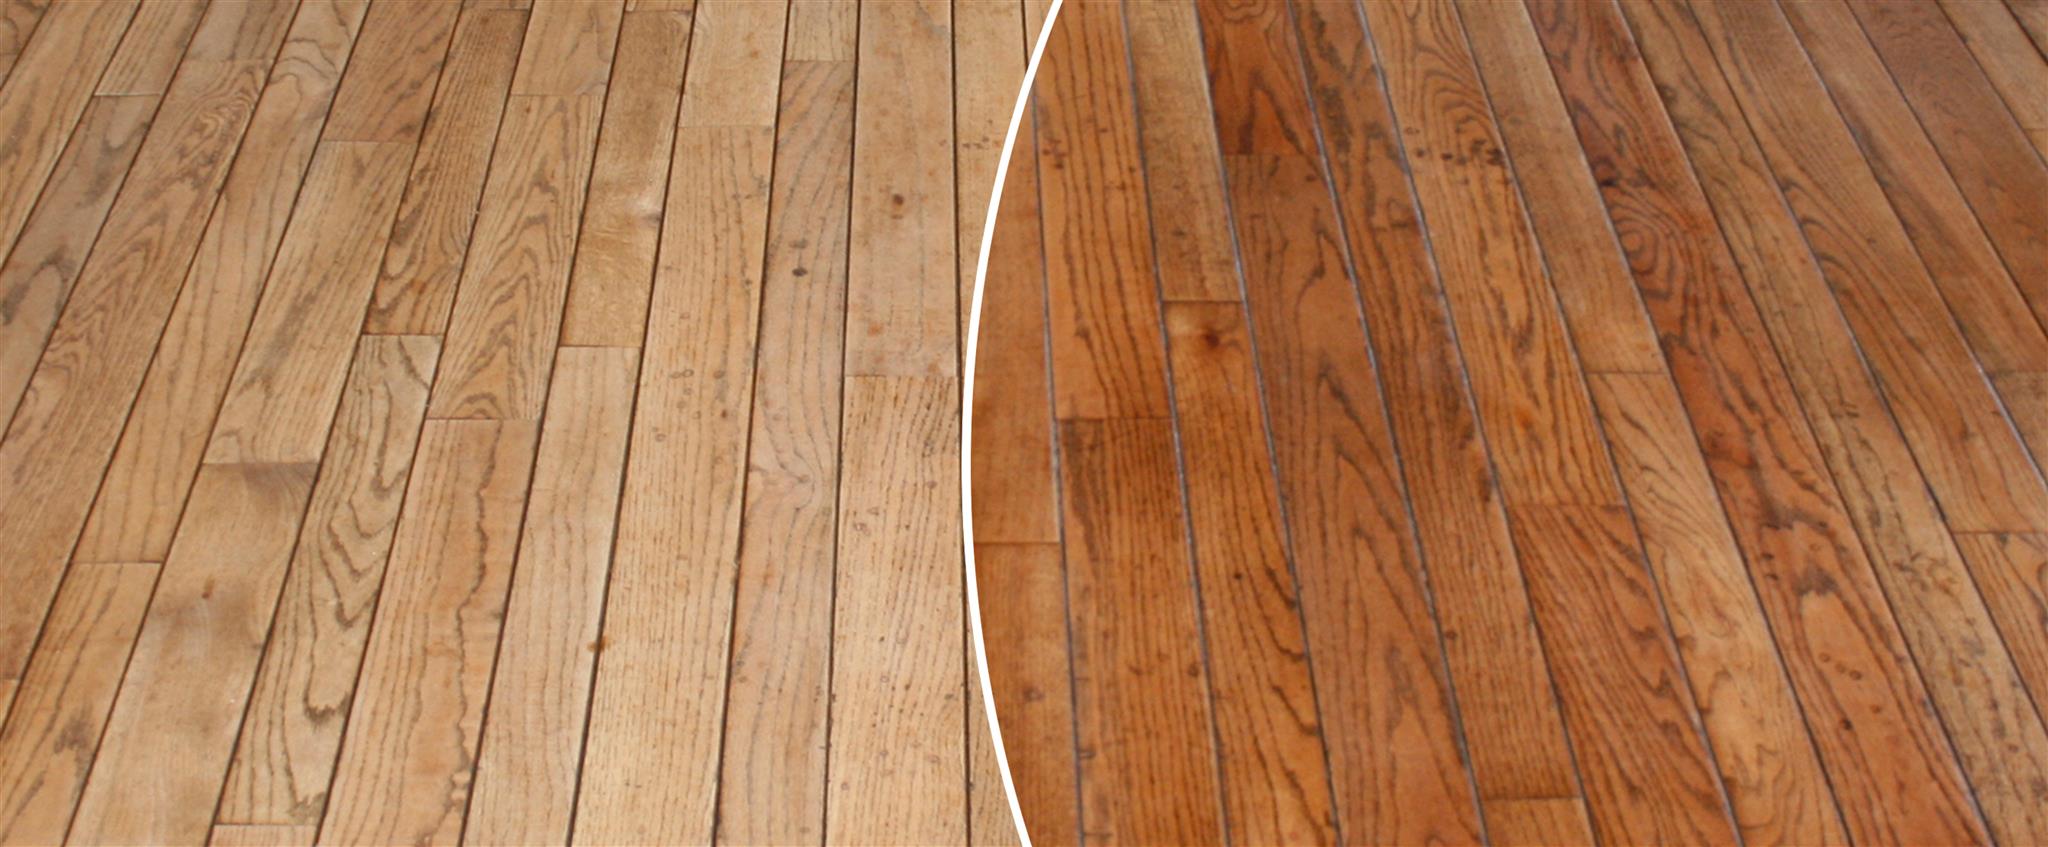 Wood Floor Refinishing Services N Hance, Hardwood Floor Refinishing Troy Mi